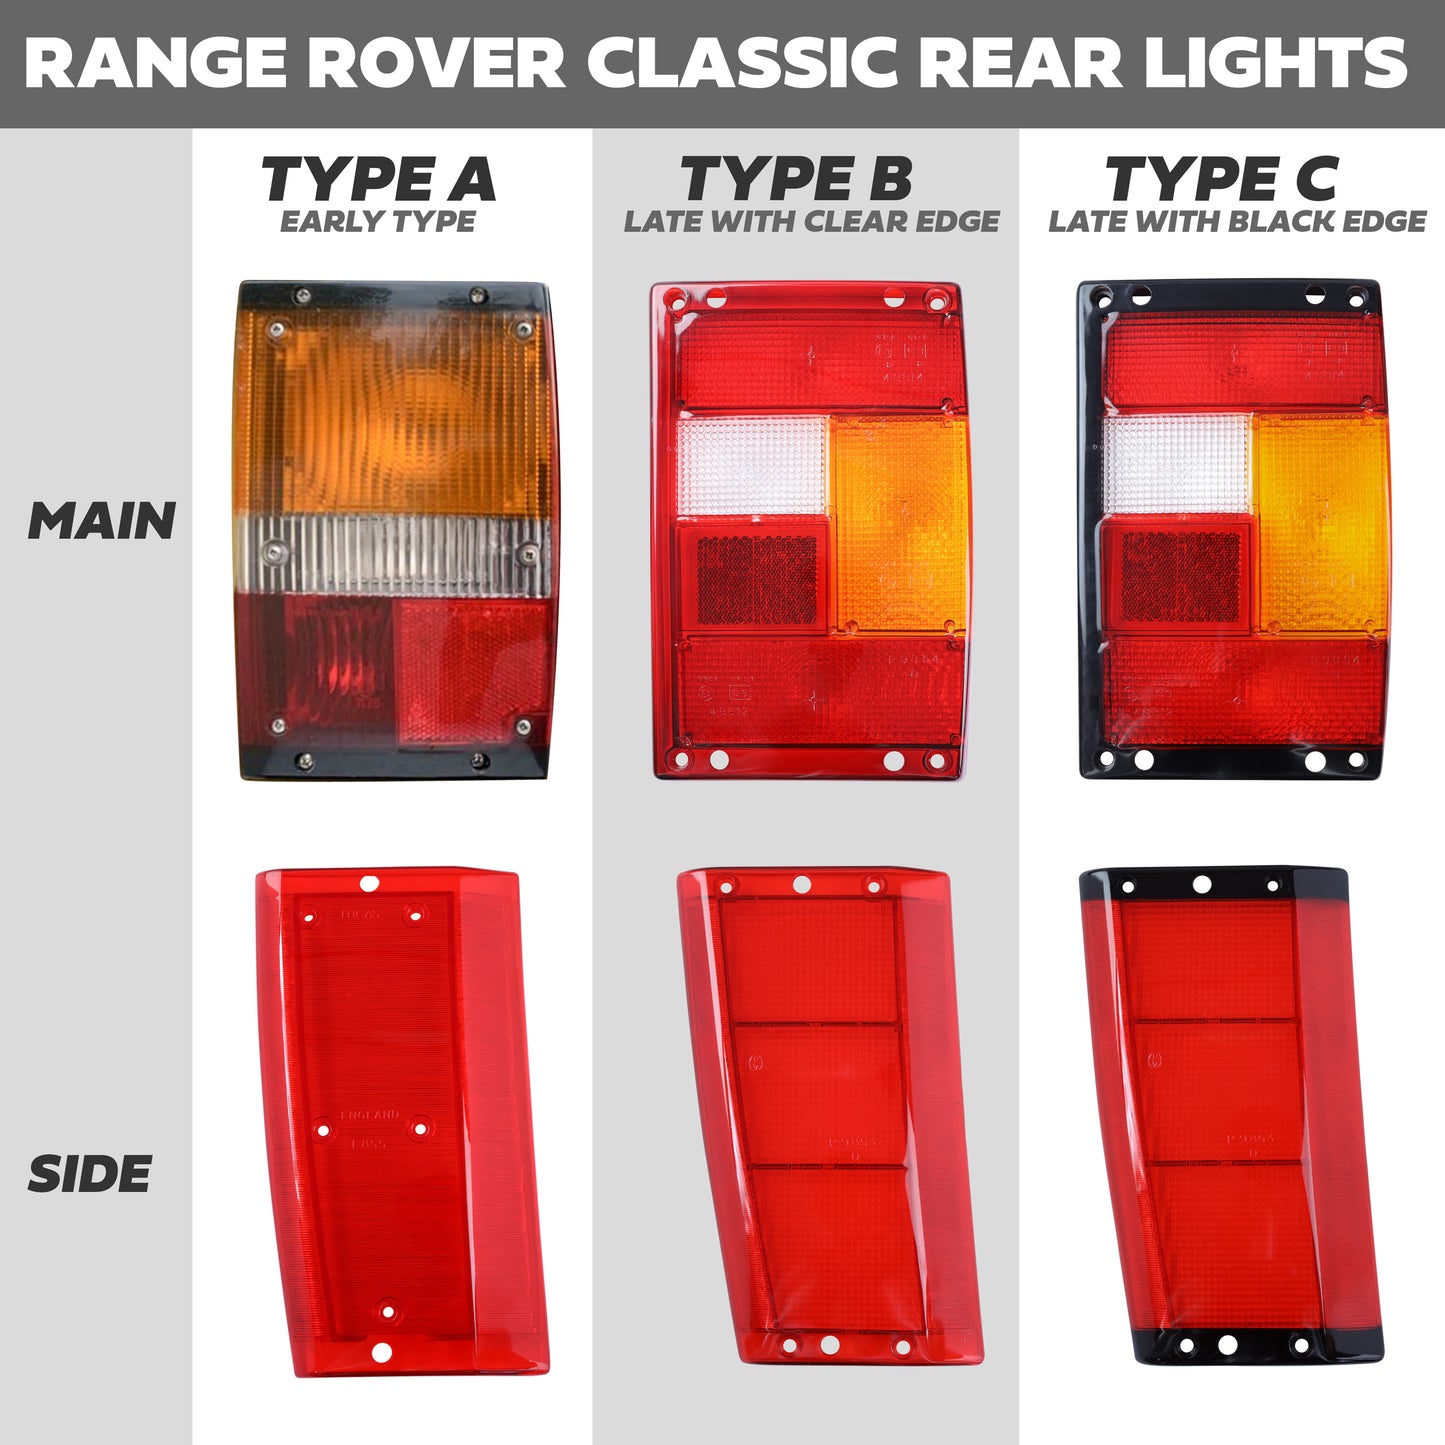 Rear Light Lens for Range Rover Classic - Side Section - Early Type - Left Side